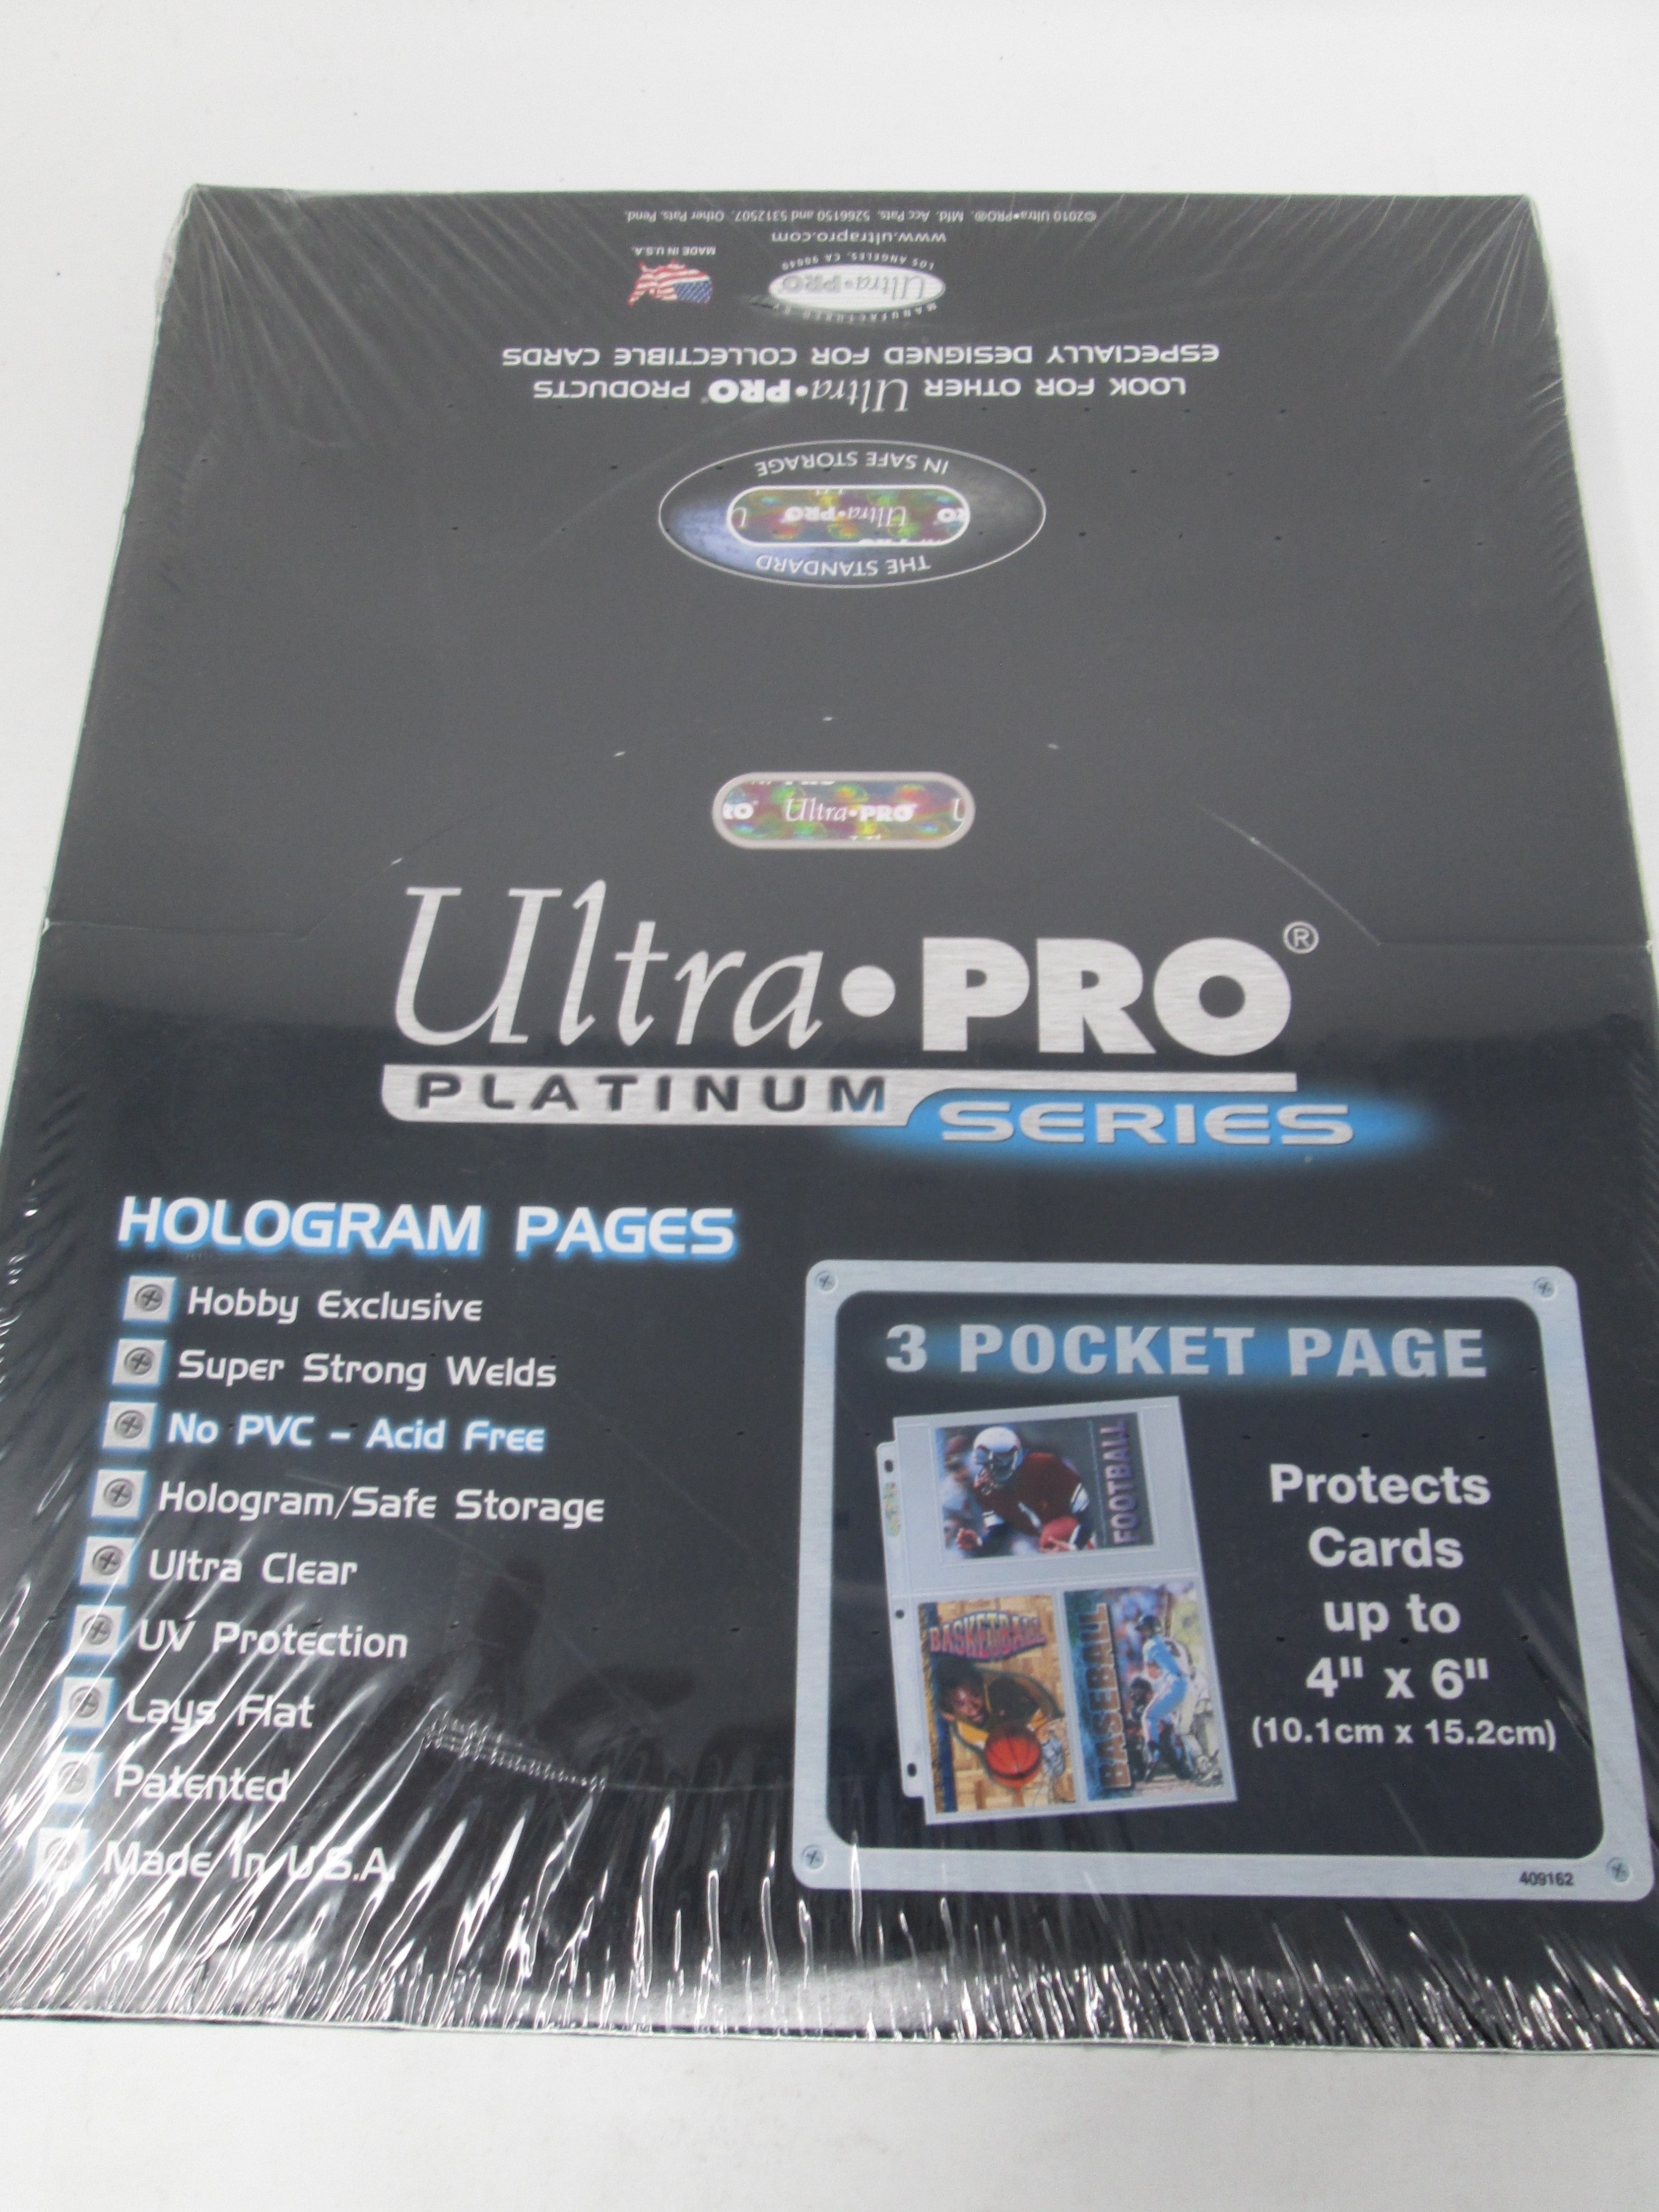 Ultra Pro 3-Pocket Platinum Page with 4" X 6" Pockets - BigBoi Cards